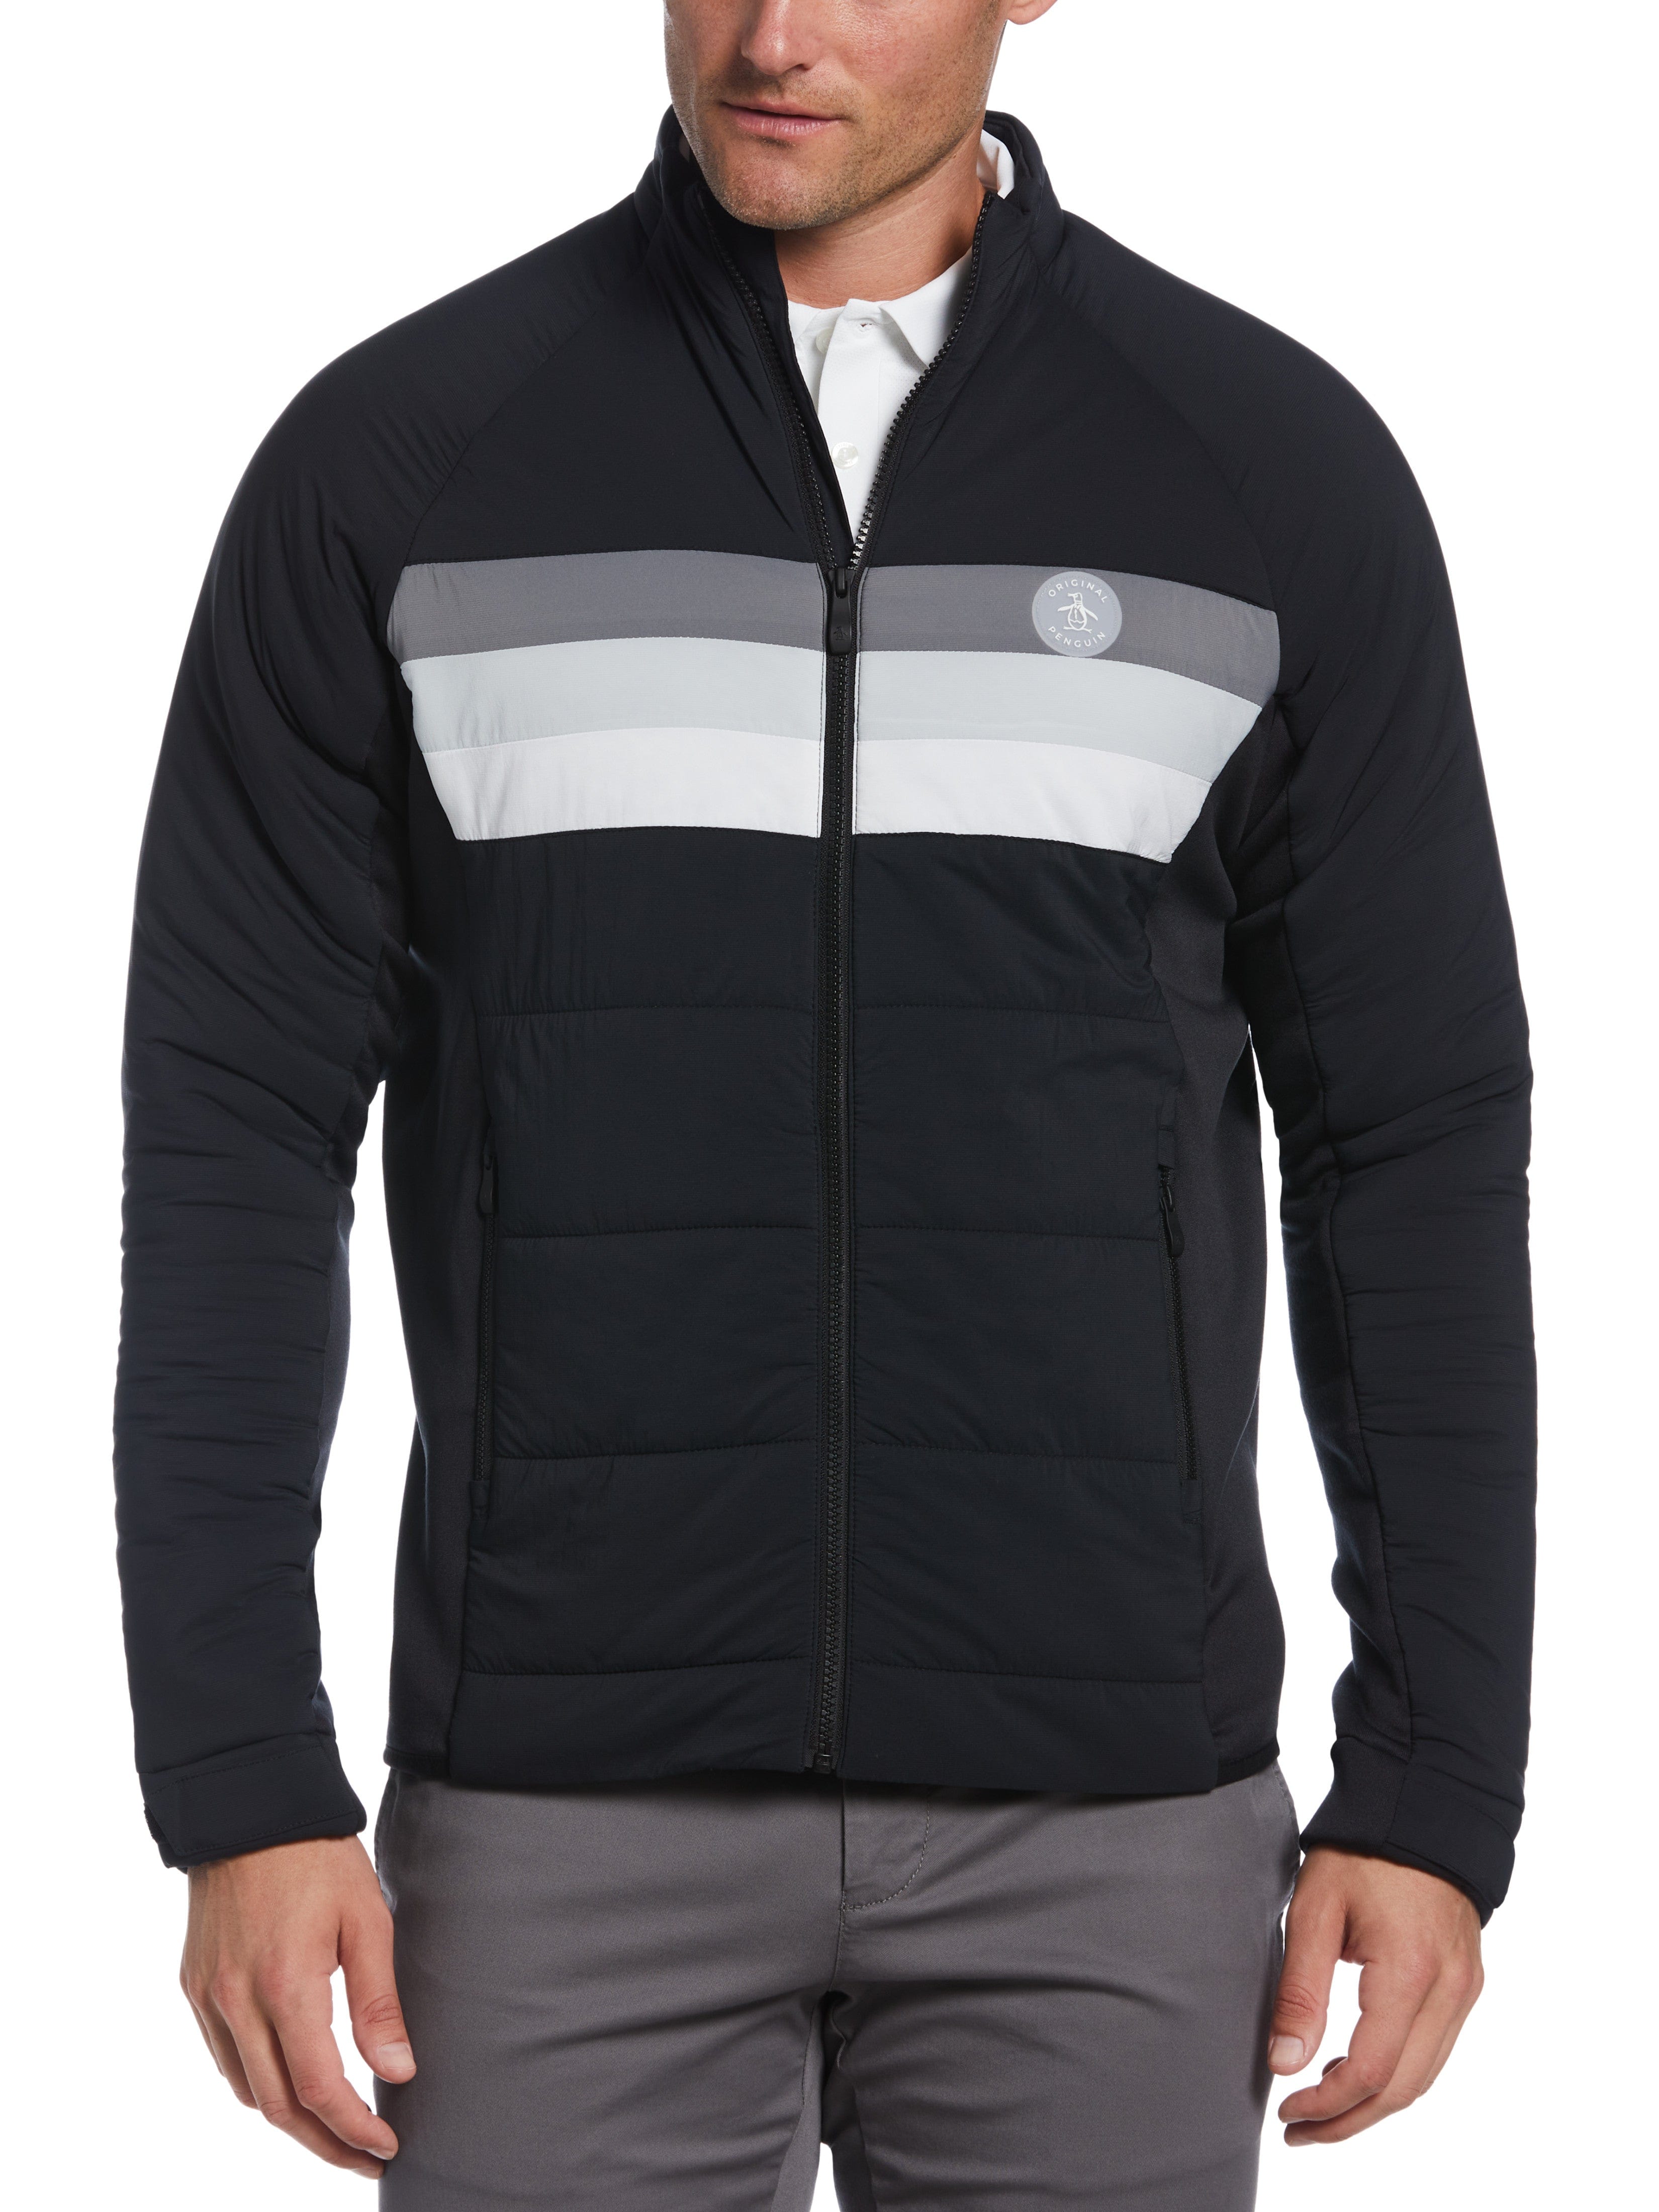 Original Penguin Mens Insulated 70s Golf Jacket Top, Size Small, Black, 100% Nylon | Golf Apparel Shop